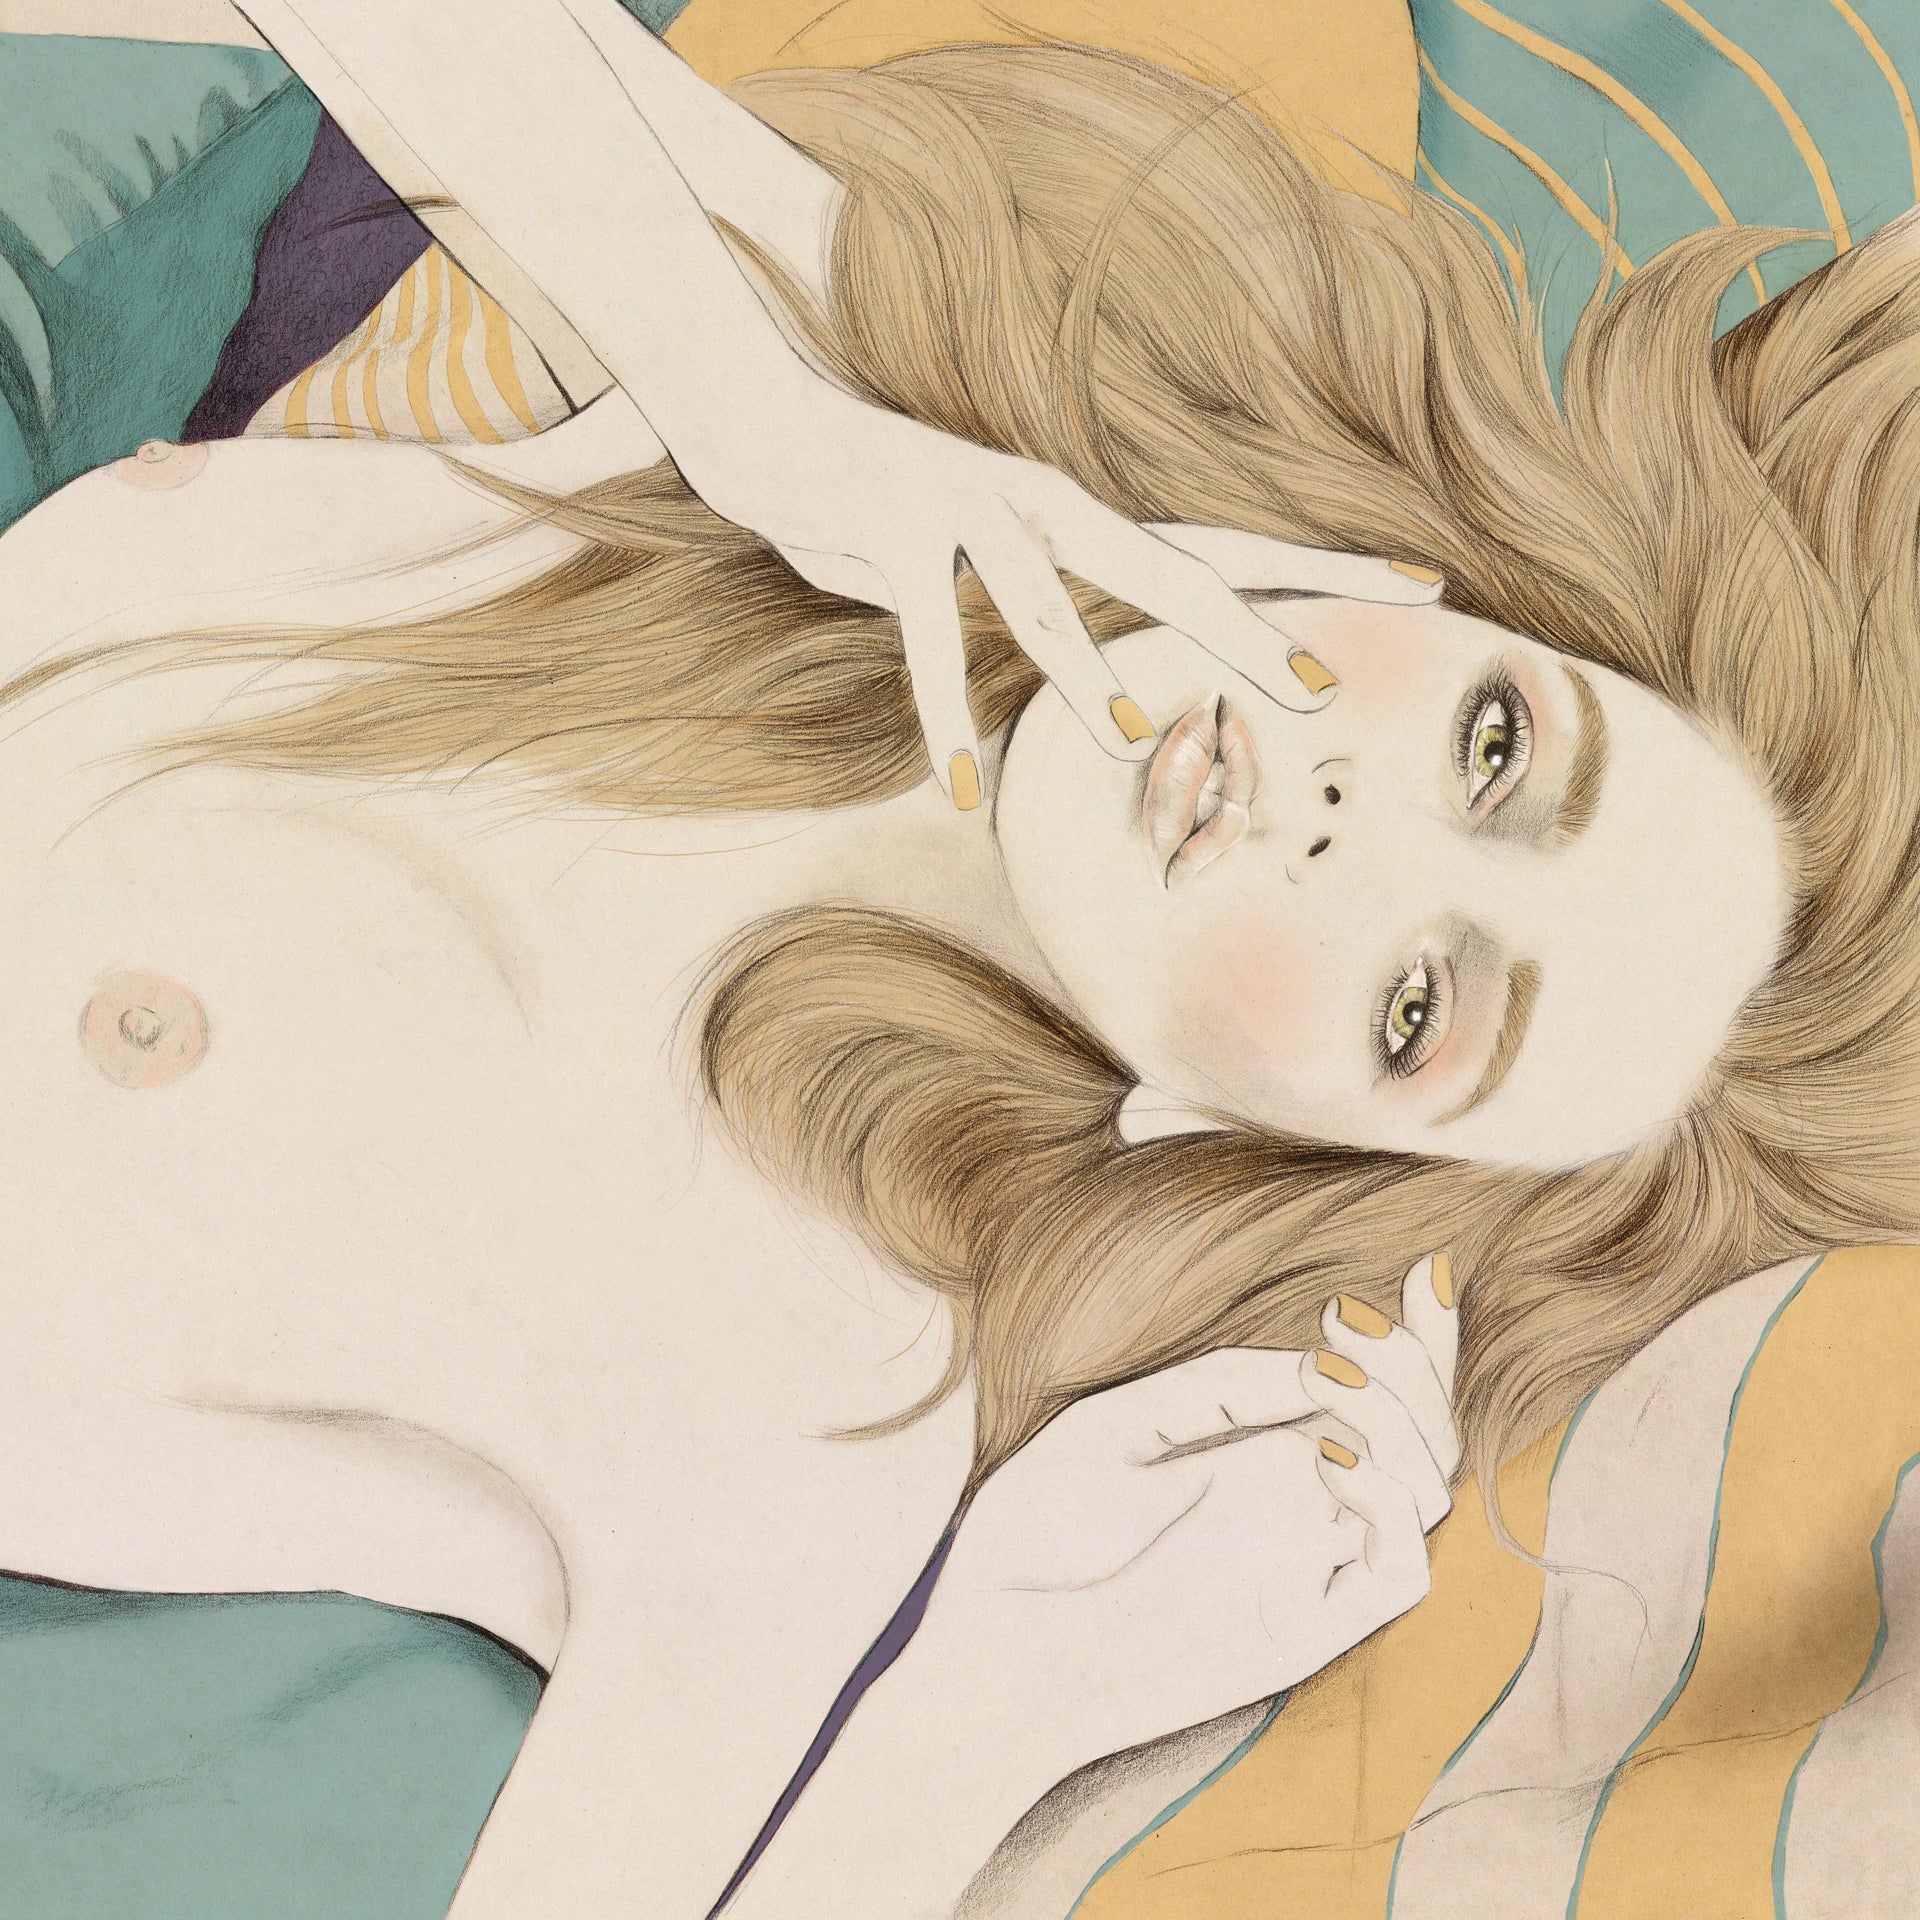 Nude beauty illustration by Melbourne based illustrator Kelly Thompson